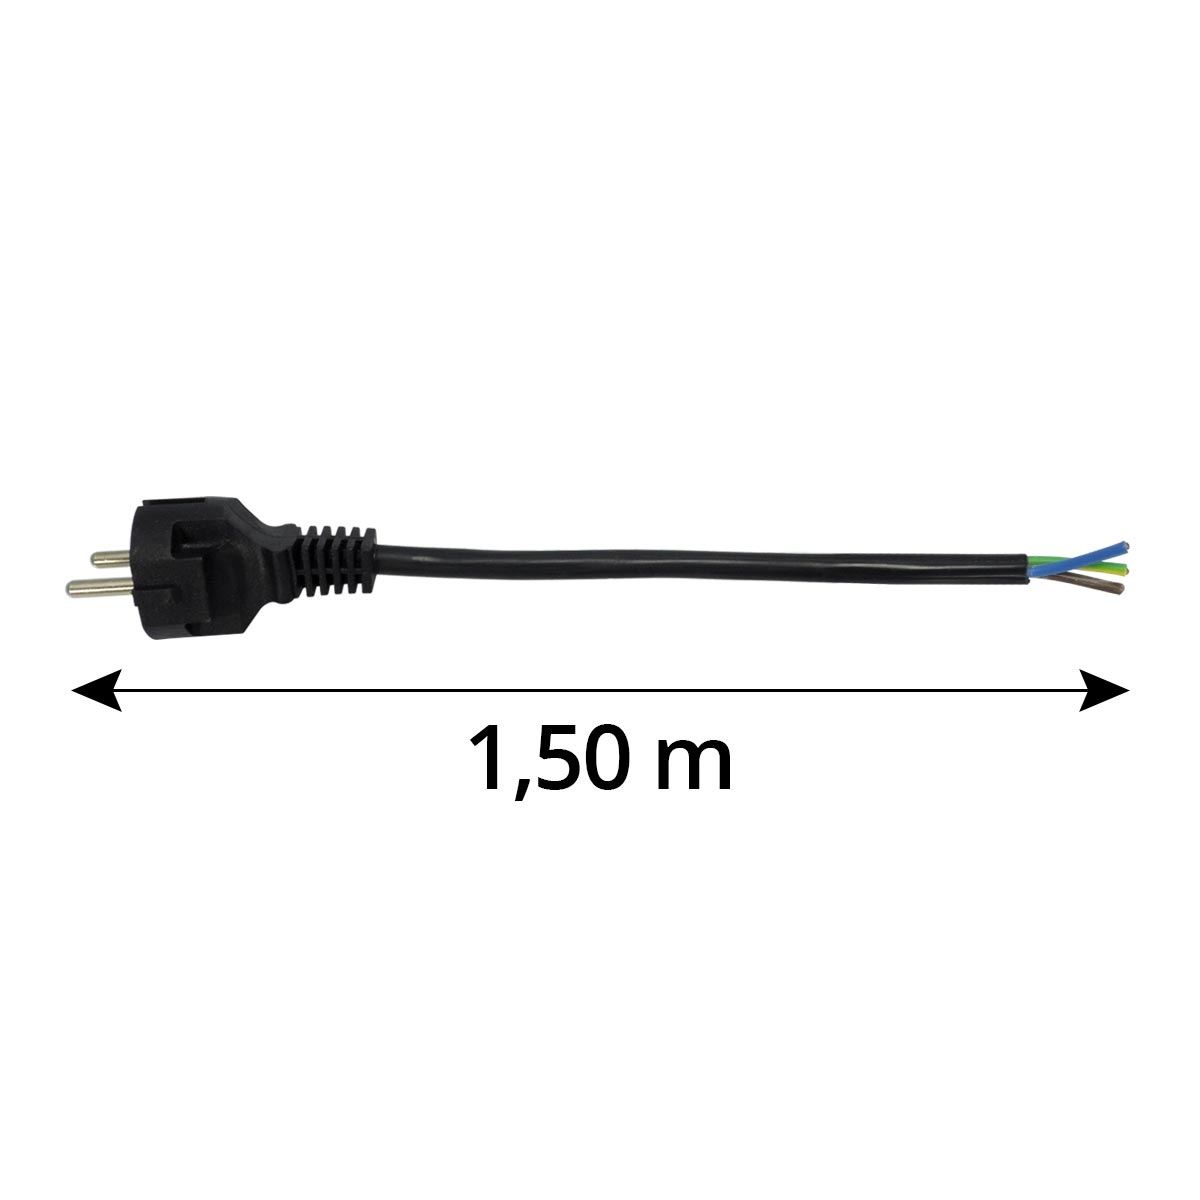 Câble prise terre 3*1.5mm - H05VV-F - intensité 16A - L: 1.50 mètres